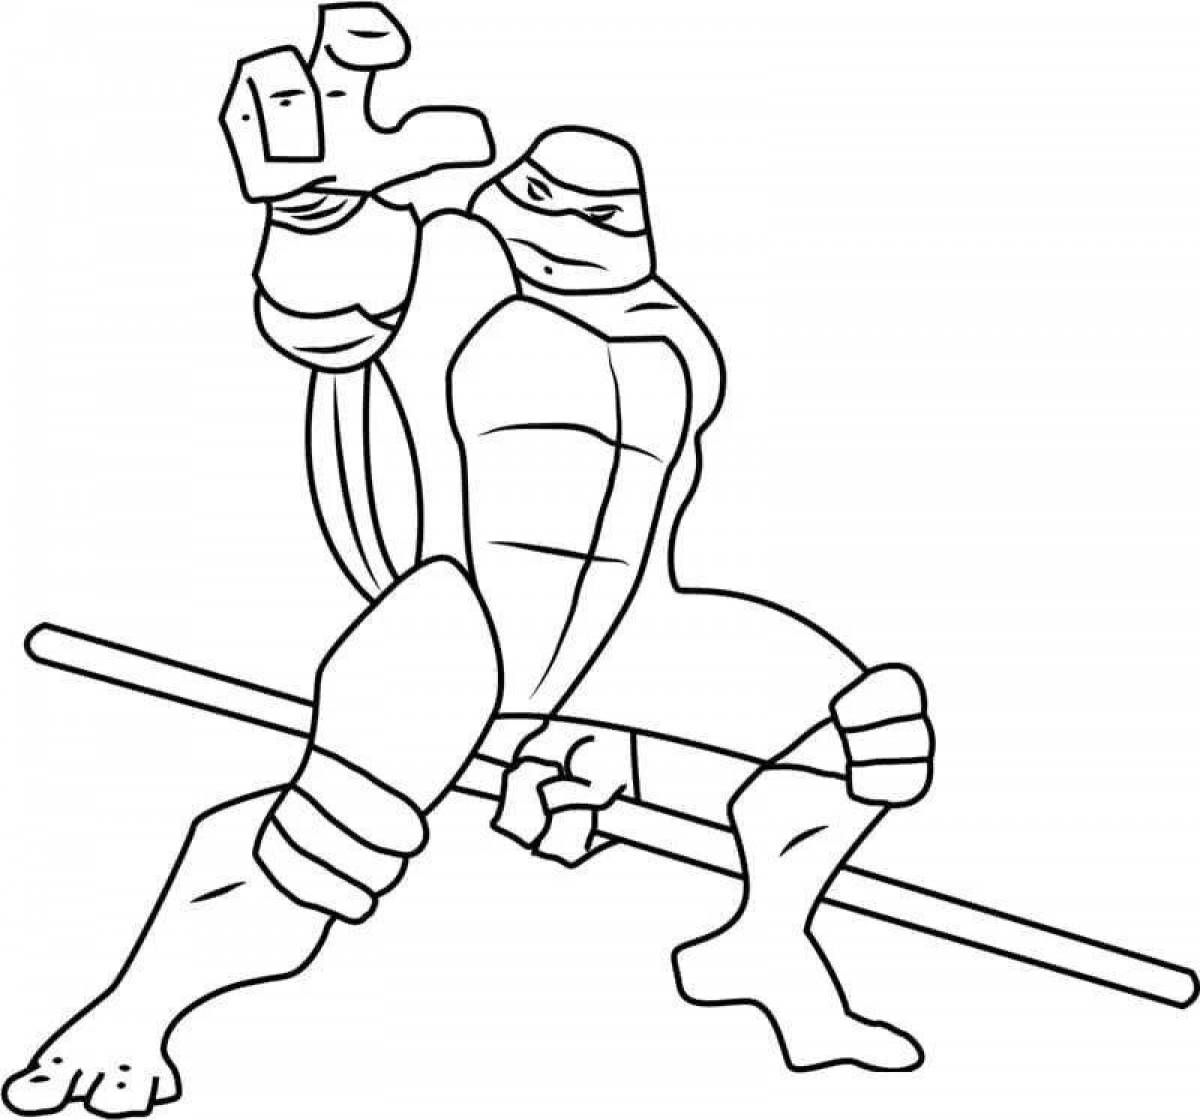 Donatello's dazzling ninja turtles coloring book